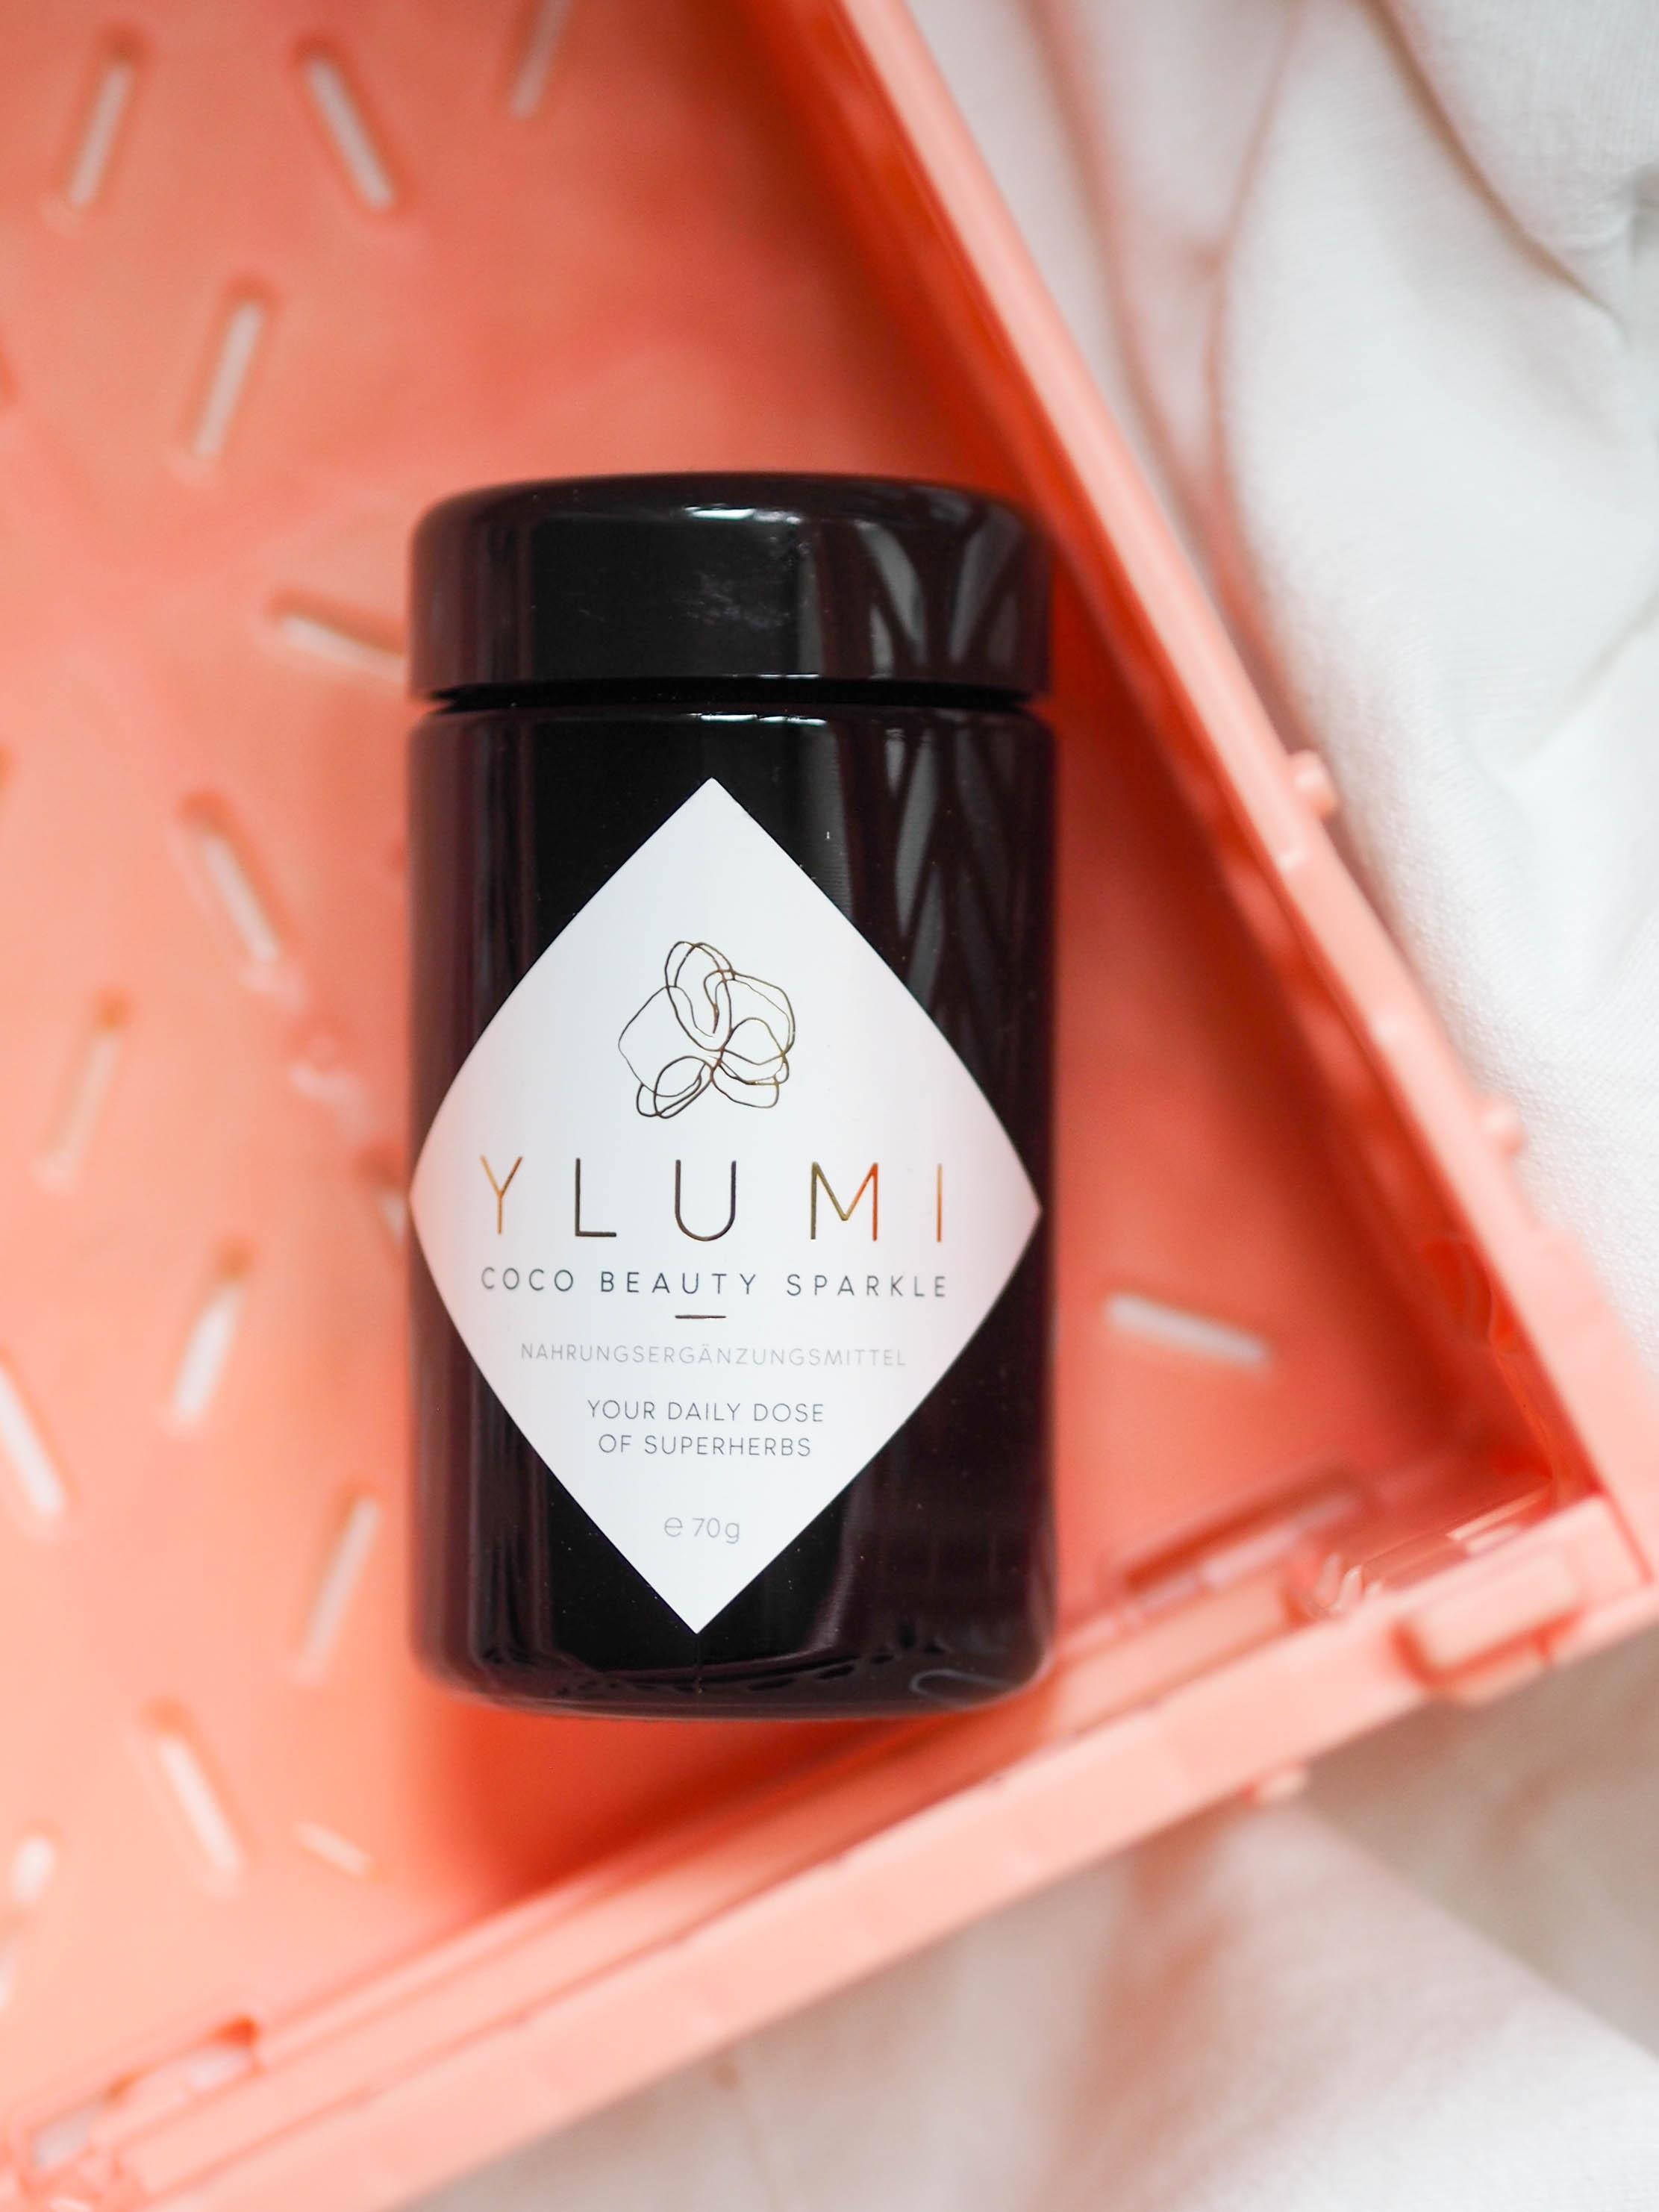 Das Rundum-Paket hat #ylumi für uns: Die Beautykur aus Kräutern unterstützt Haut, Haare & Nägel #beautylieblinge